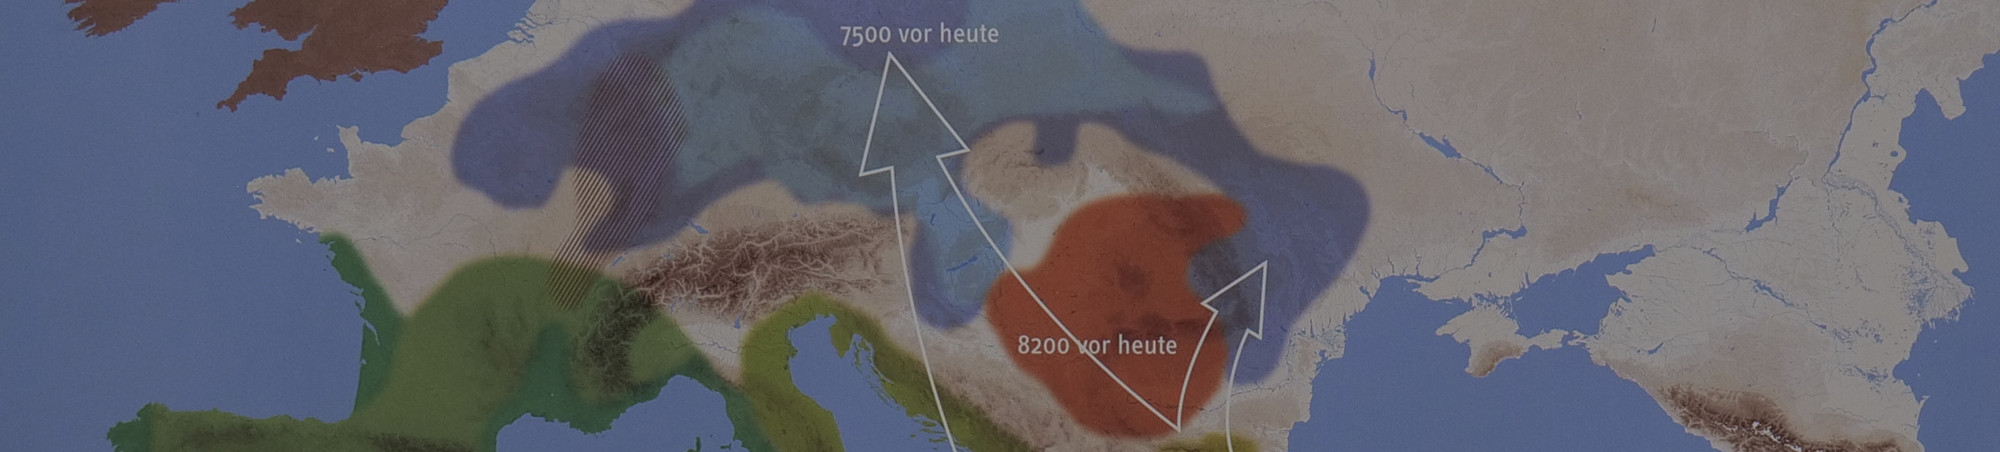 Ausschnitt Europakarte mit Pfeilen zur Besiedlung